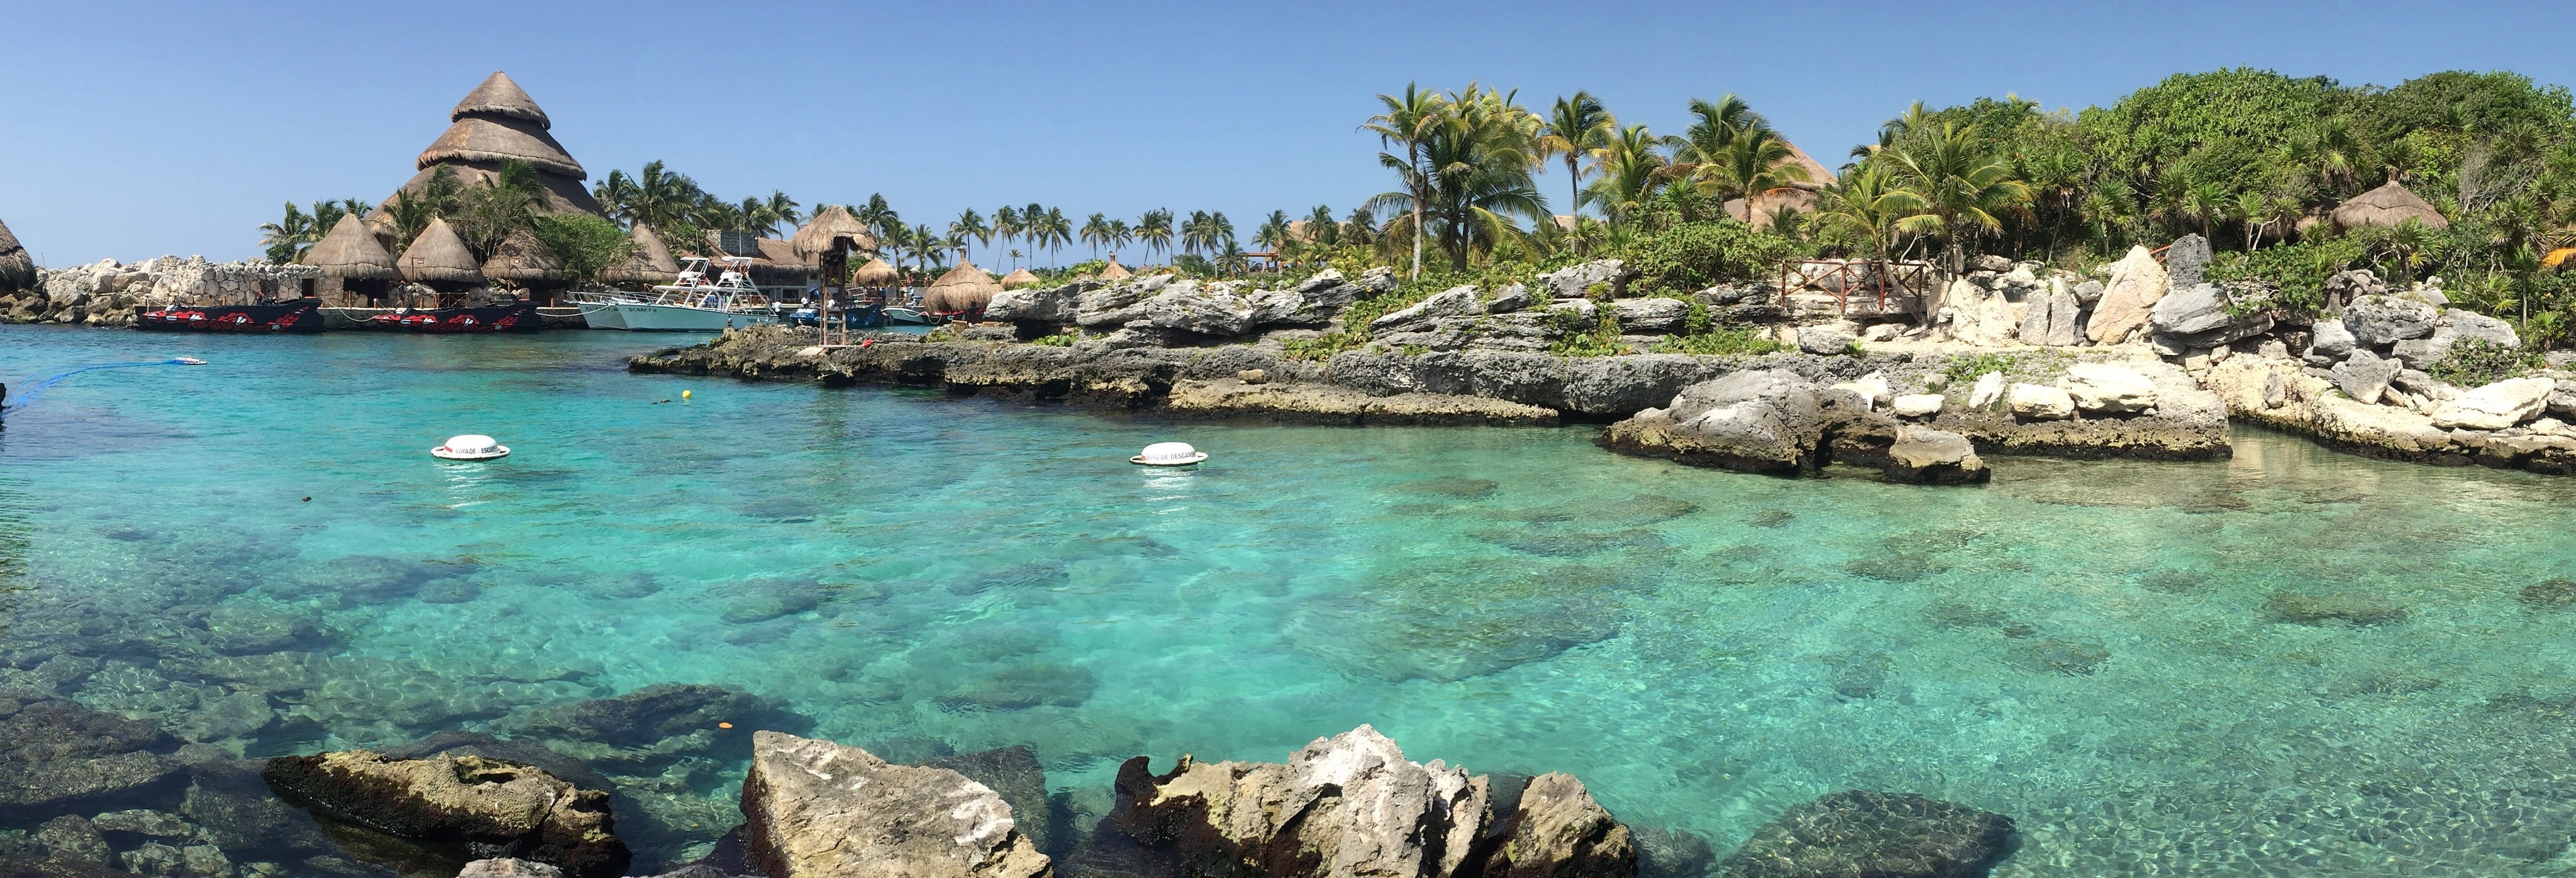 Oferta: Excursão a dois parques da Riviera Maya